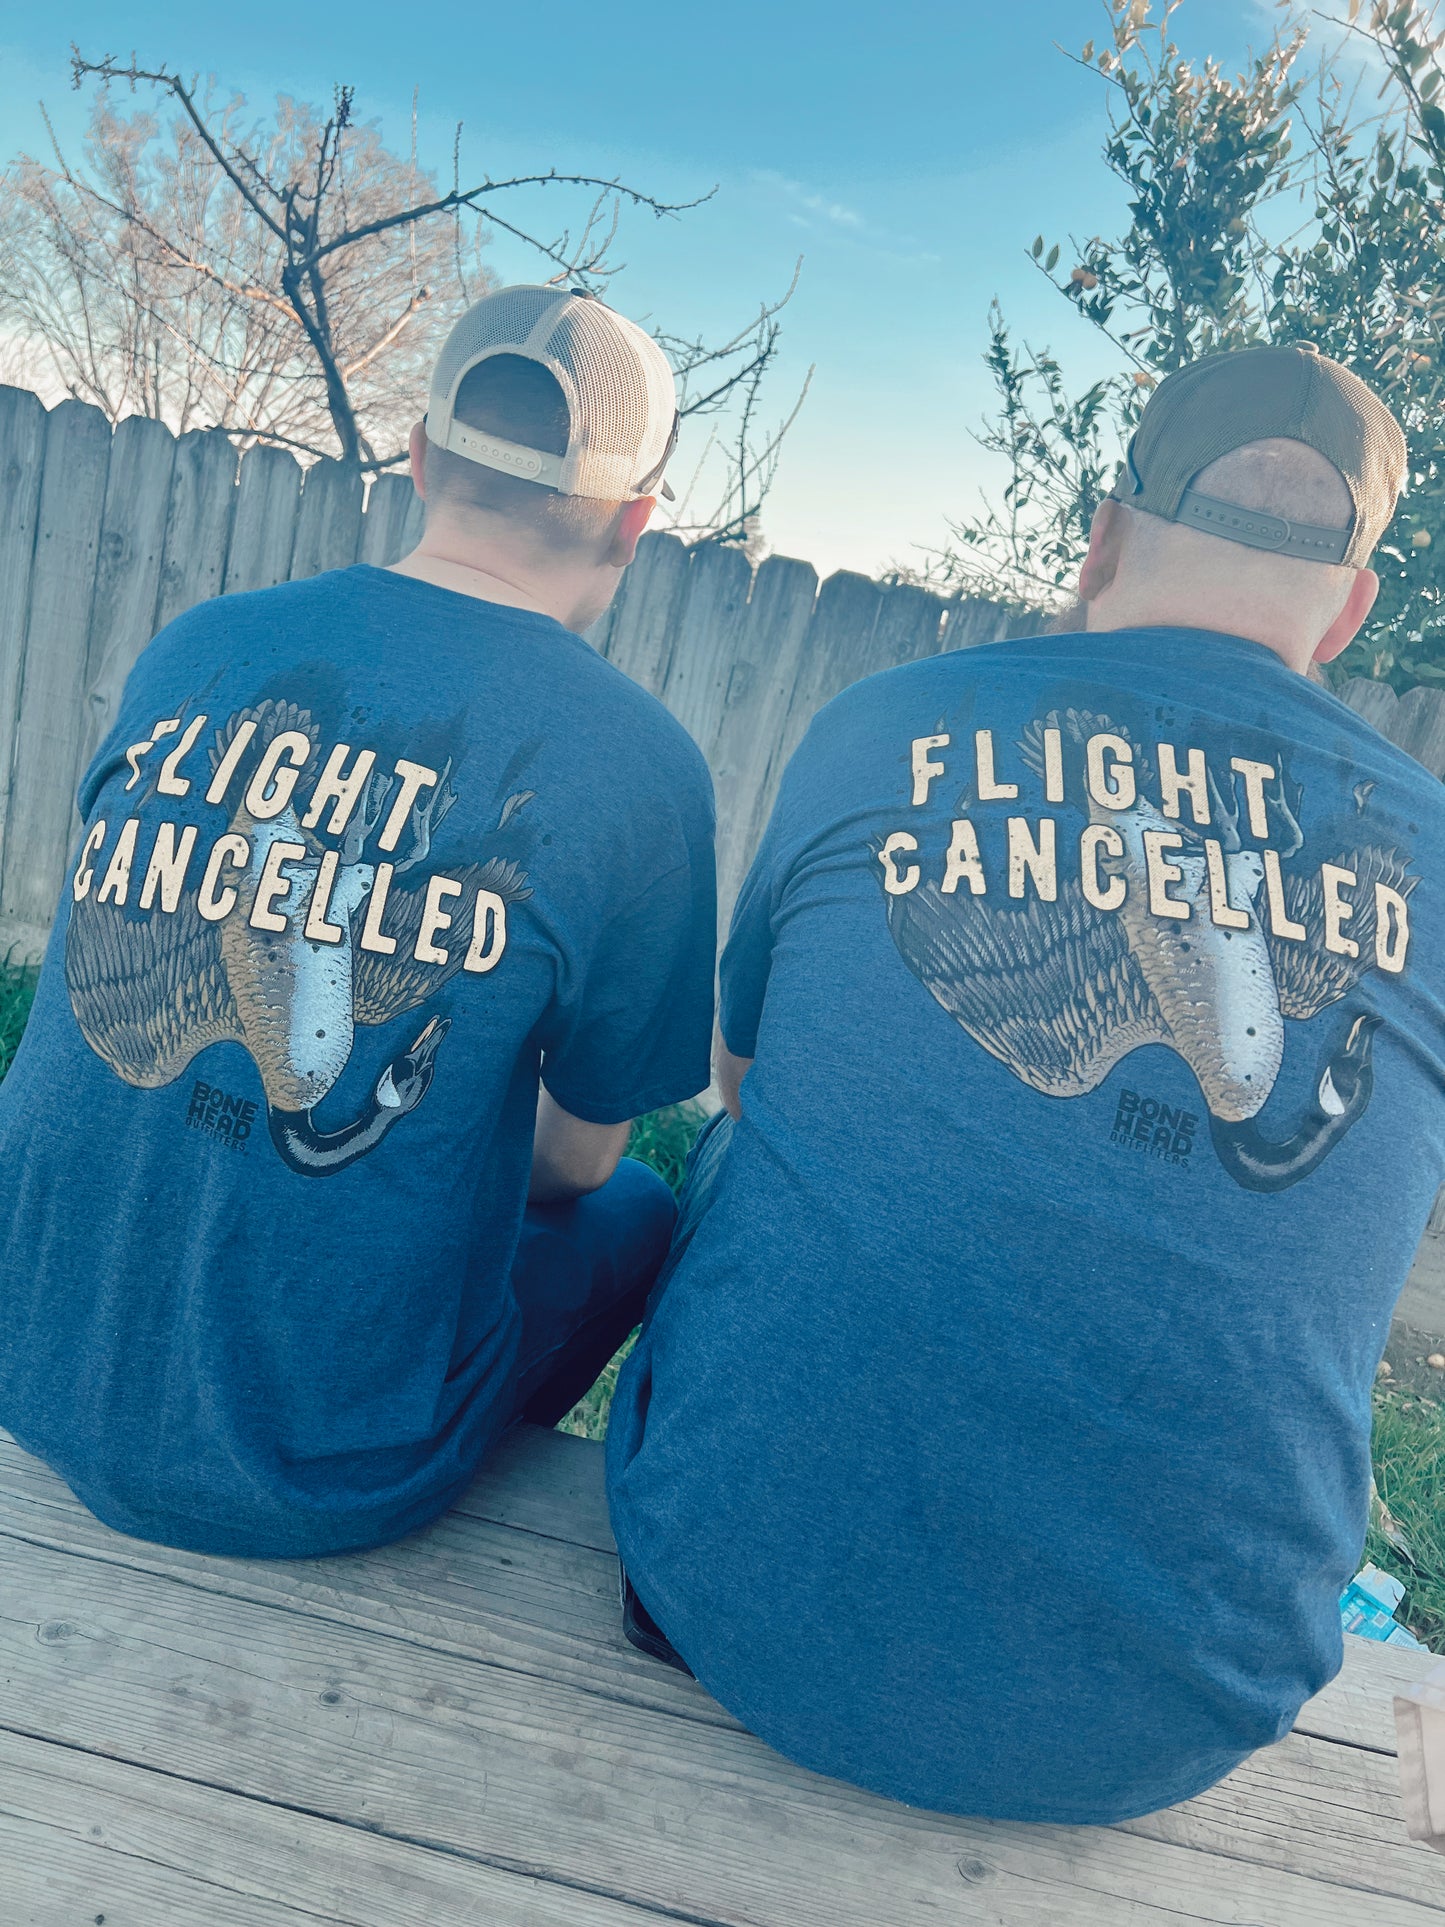 Flight cancelled tee